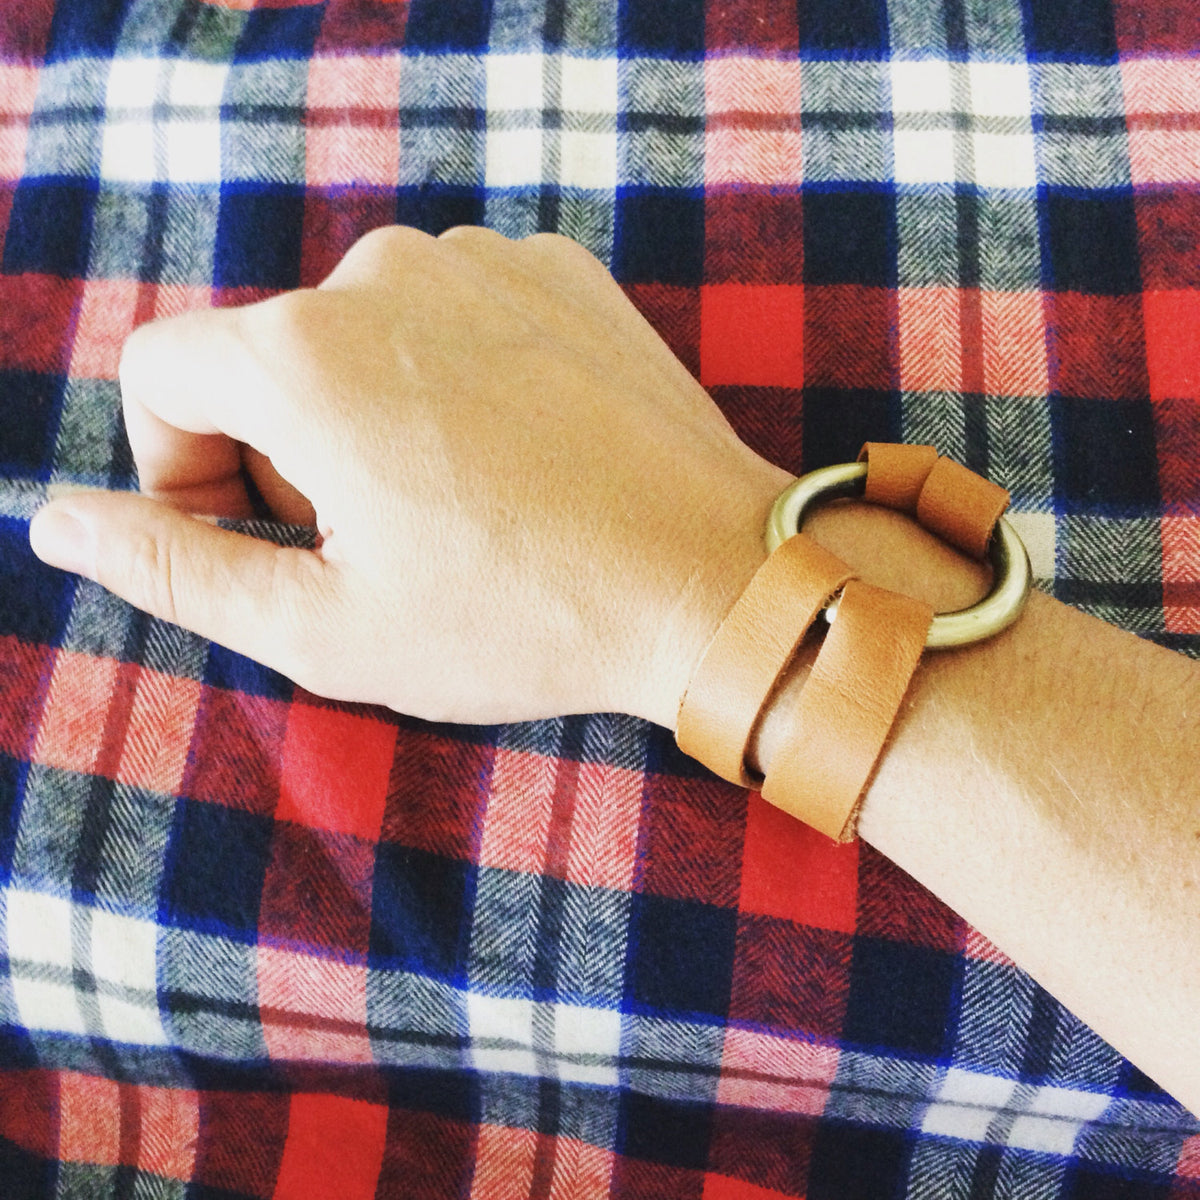 Minimalist Split Leather Bracelet with Heavy Ring